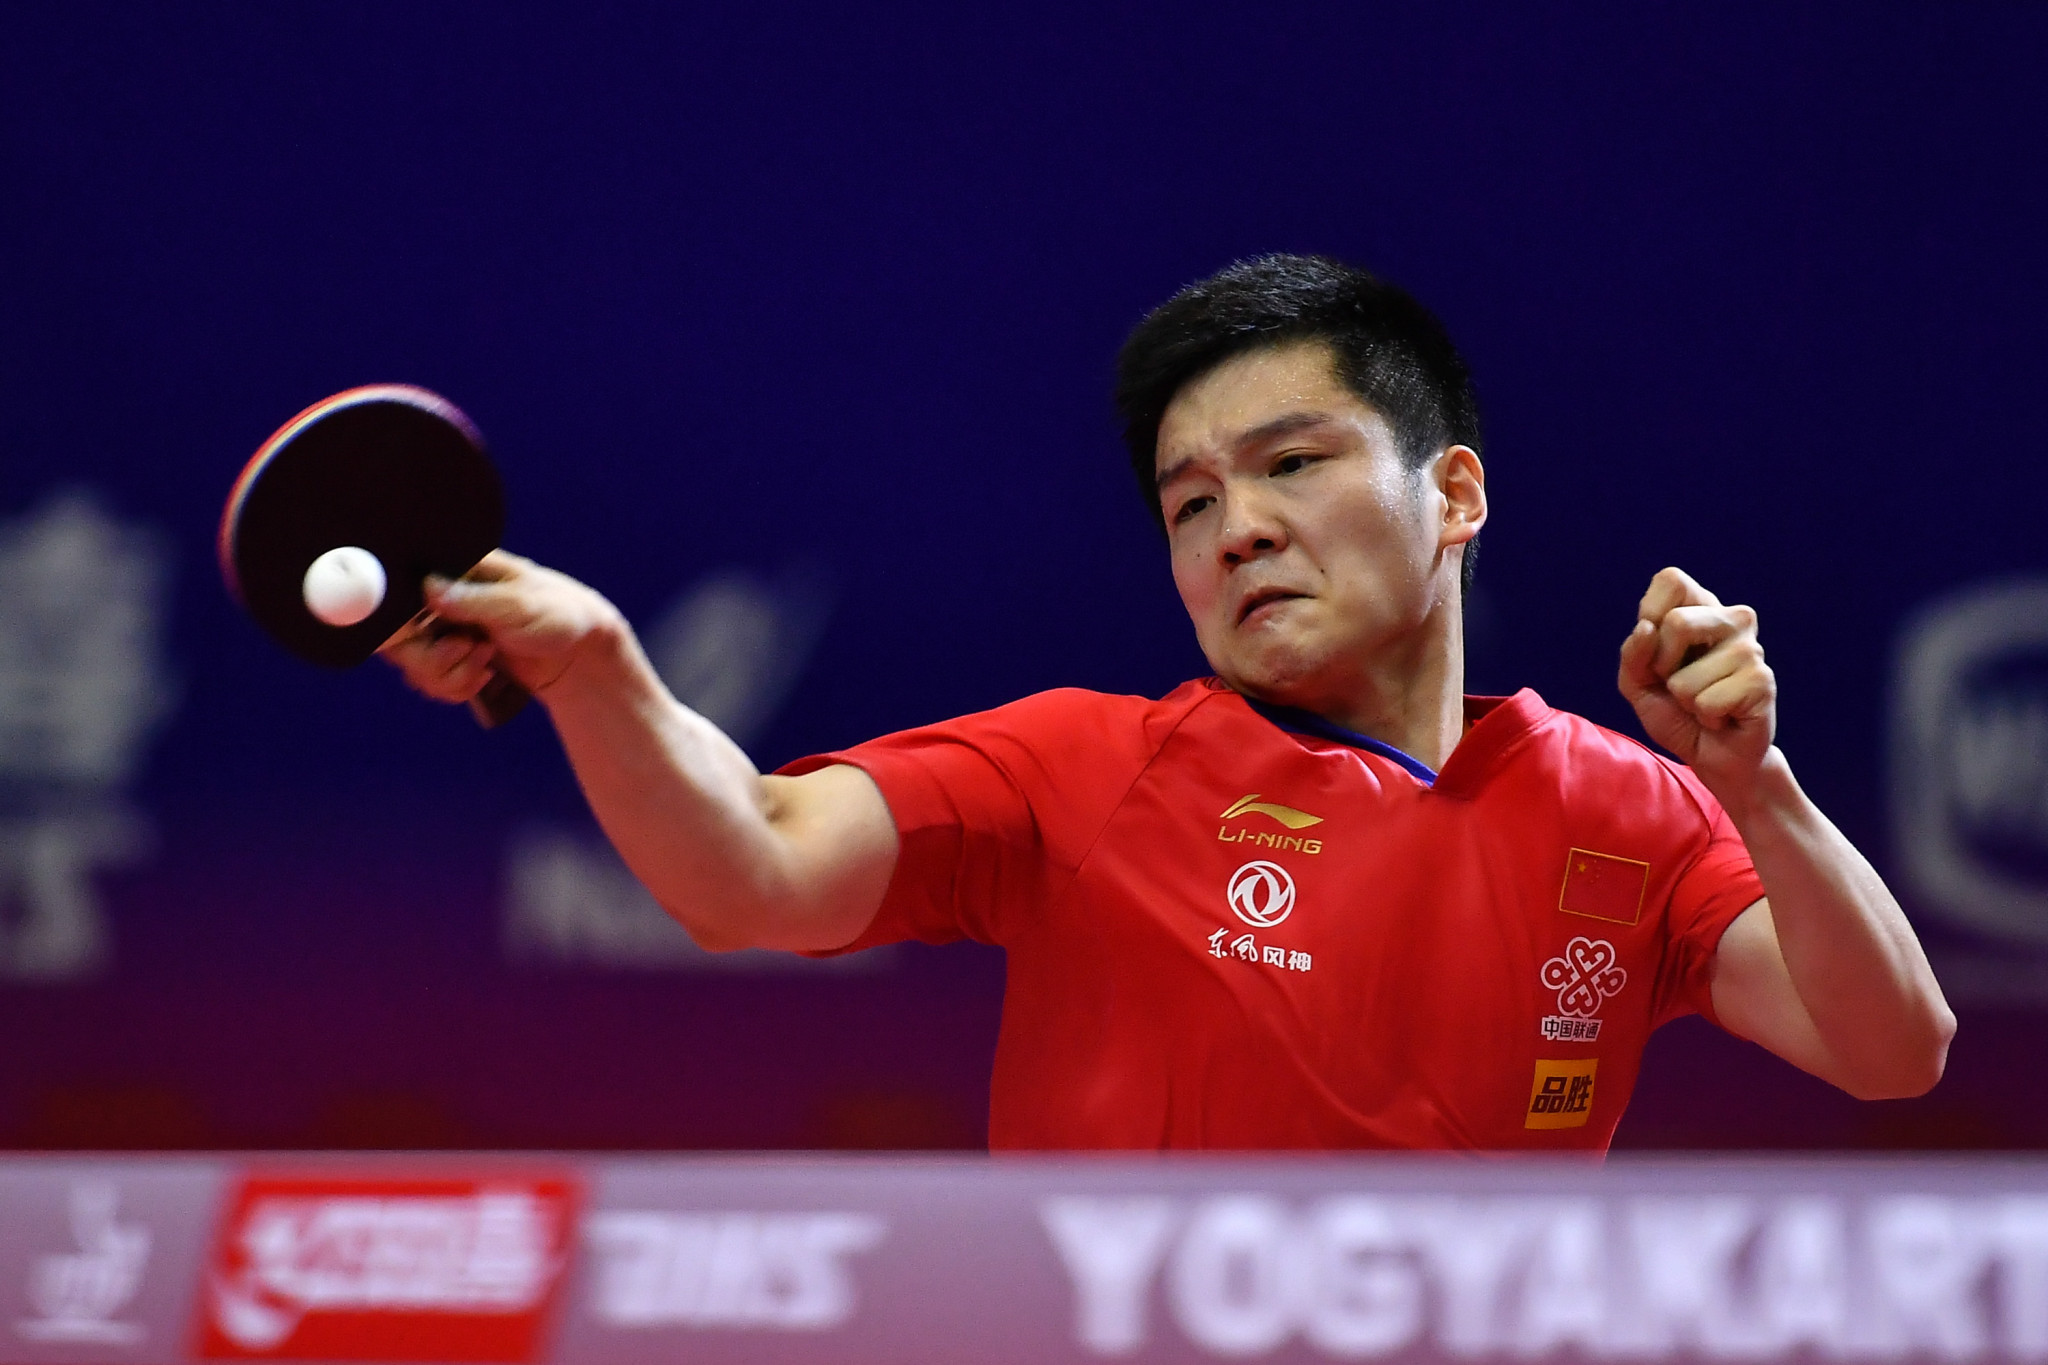 Fan into ITTF Swedish Open quarter-finals as China dominate